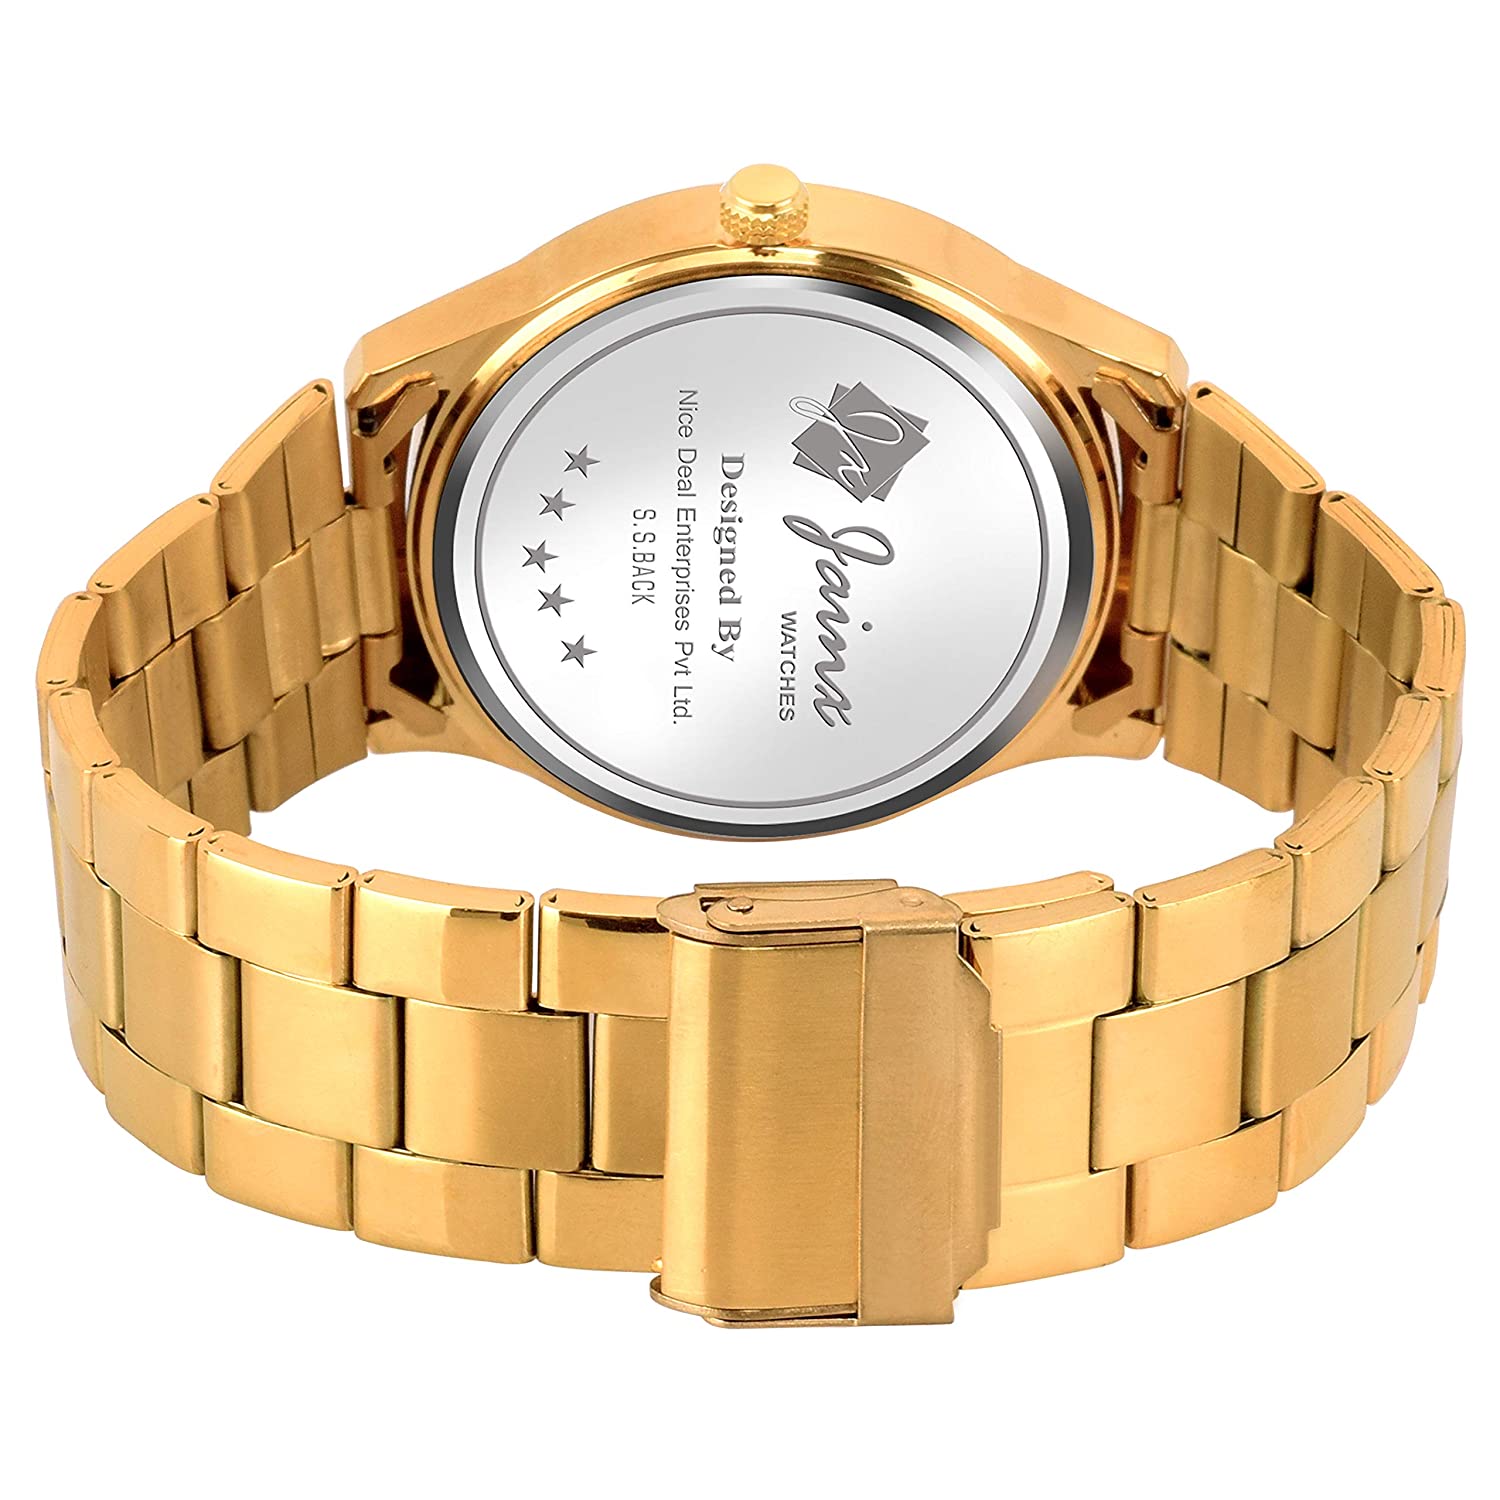 Premium Day & Date Feature Black Dial Golden Chain Analog Watch - For Men JM1132 - Jainx Store